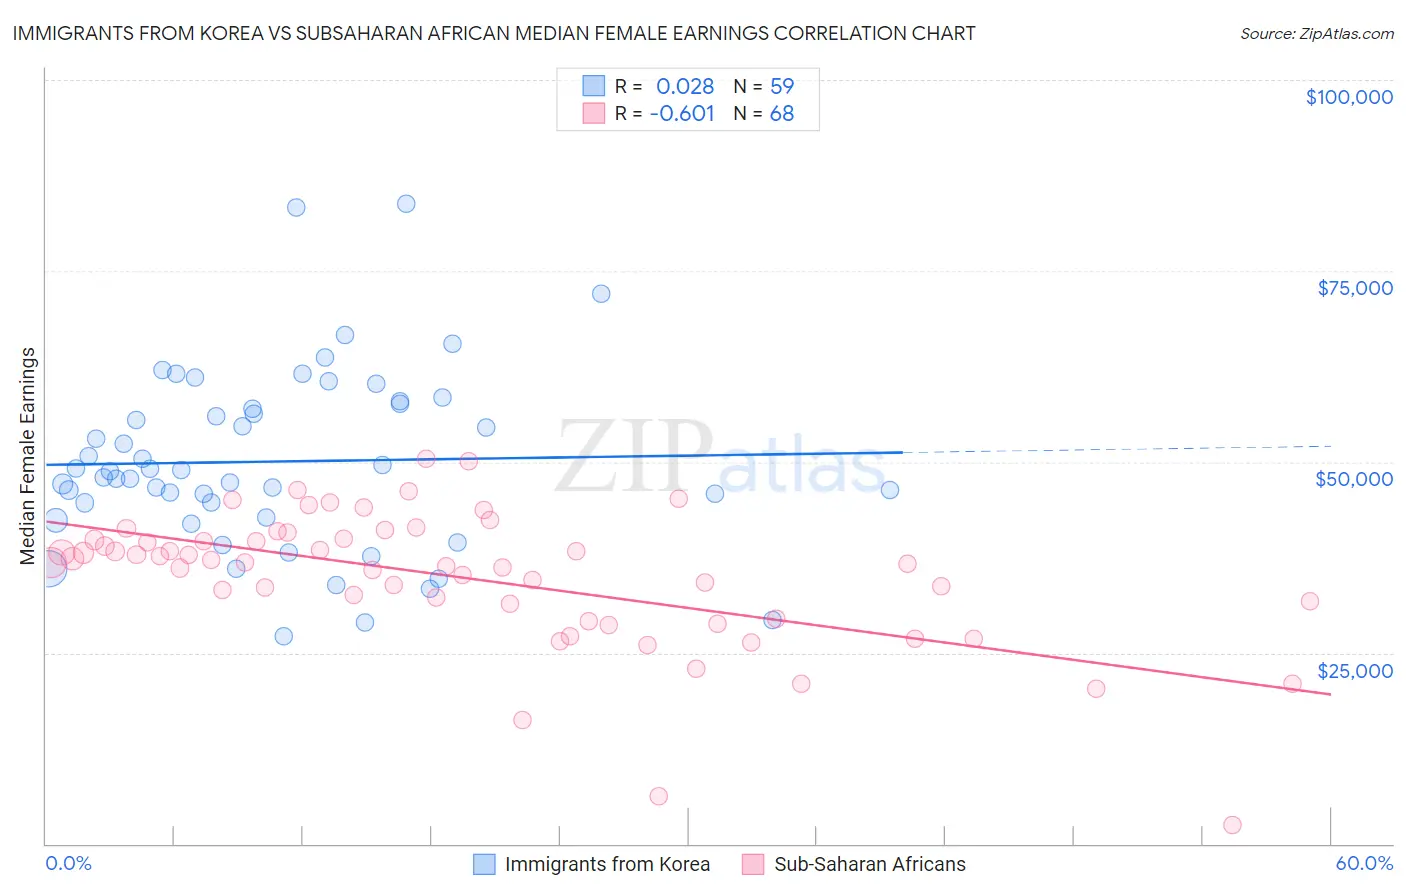 Immigrants from Korea vs Subsaharan African Median Female Earnings